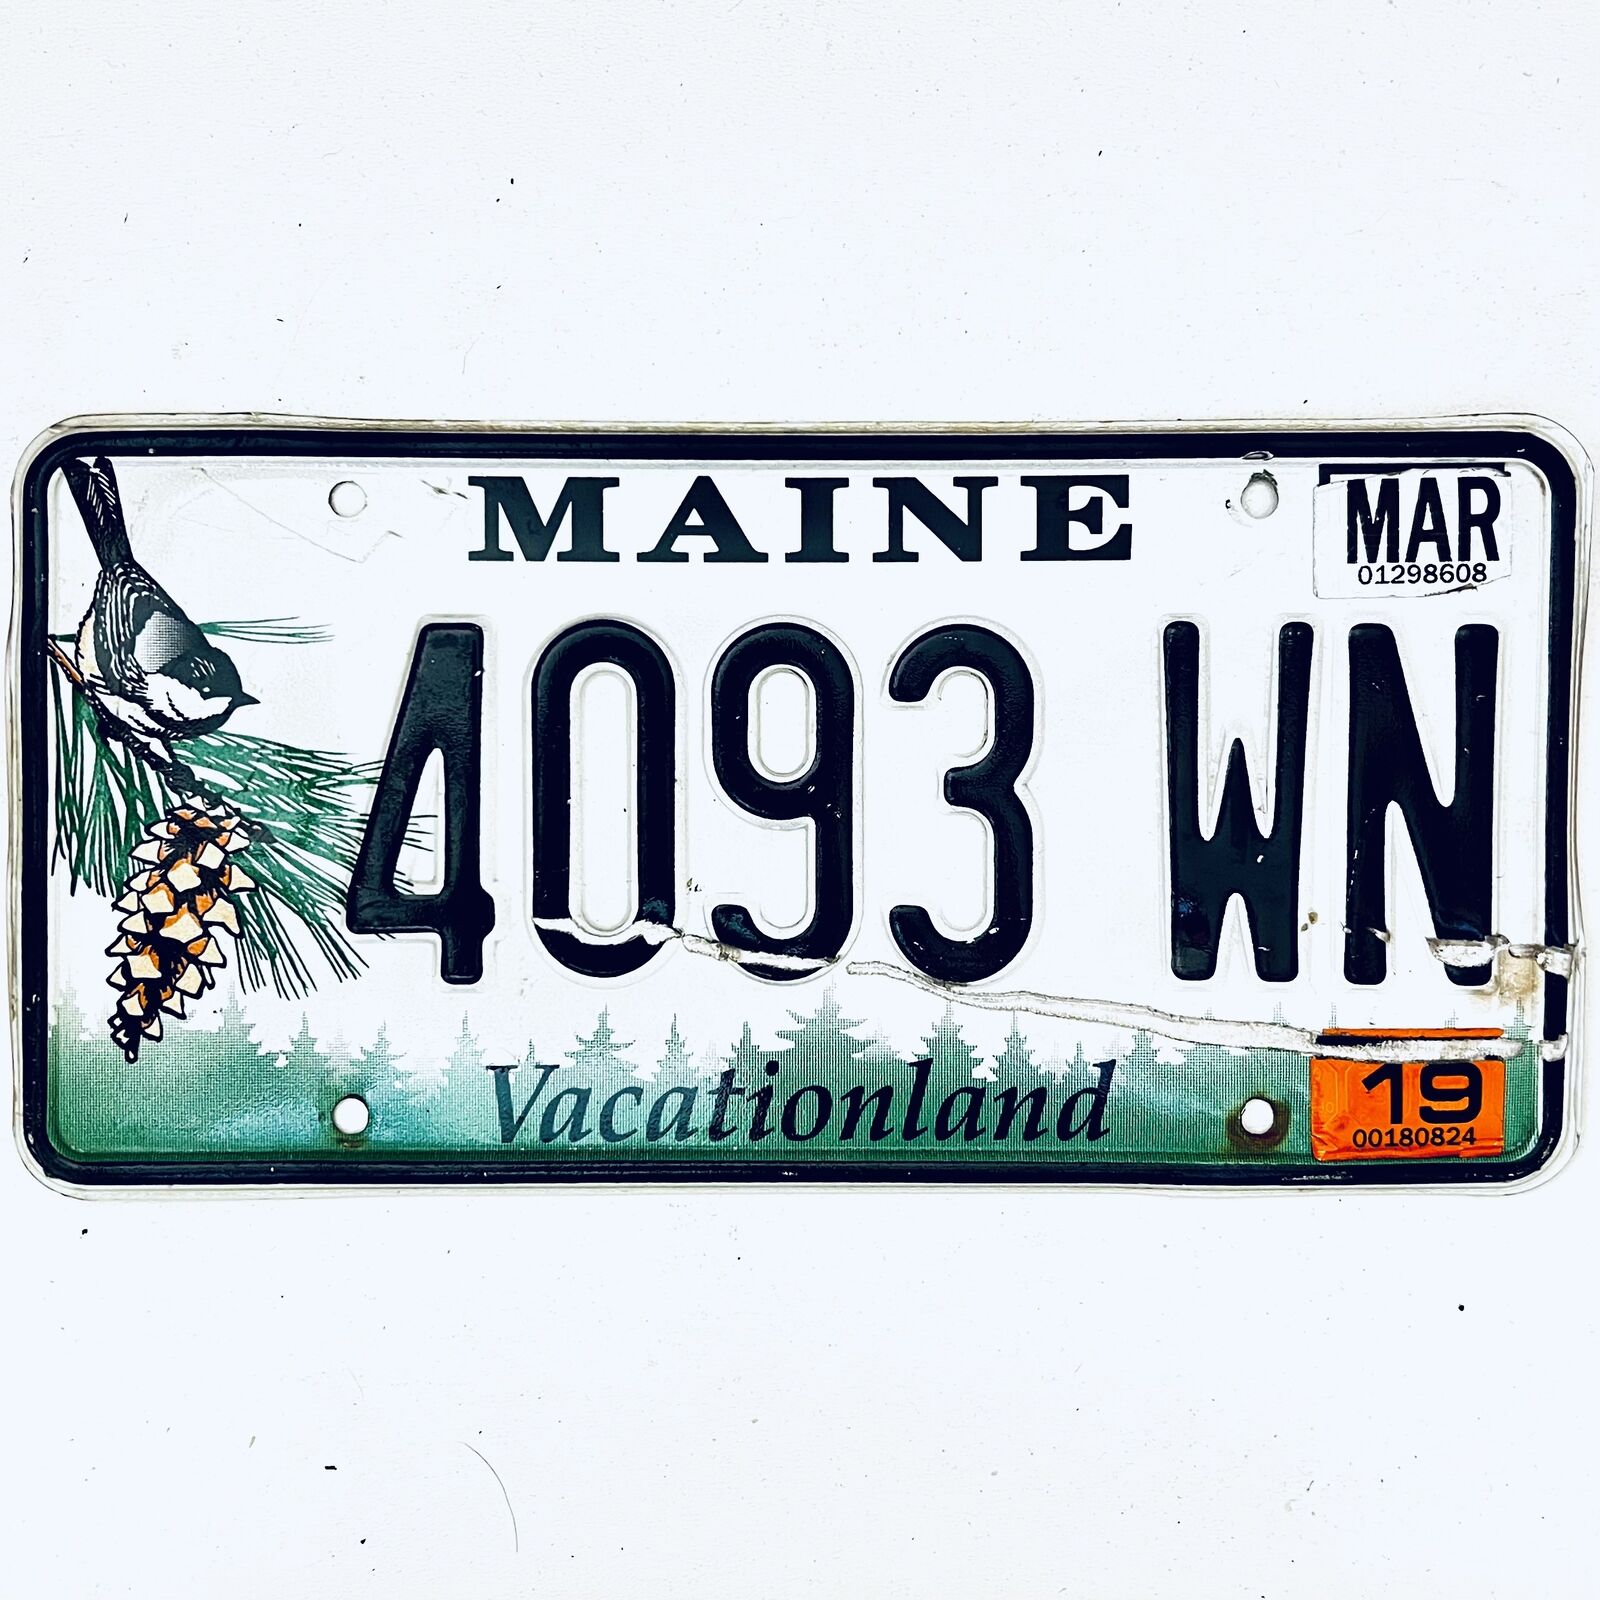 2019 United States Maine Vacationland Passsenger License Plate 4093 WN